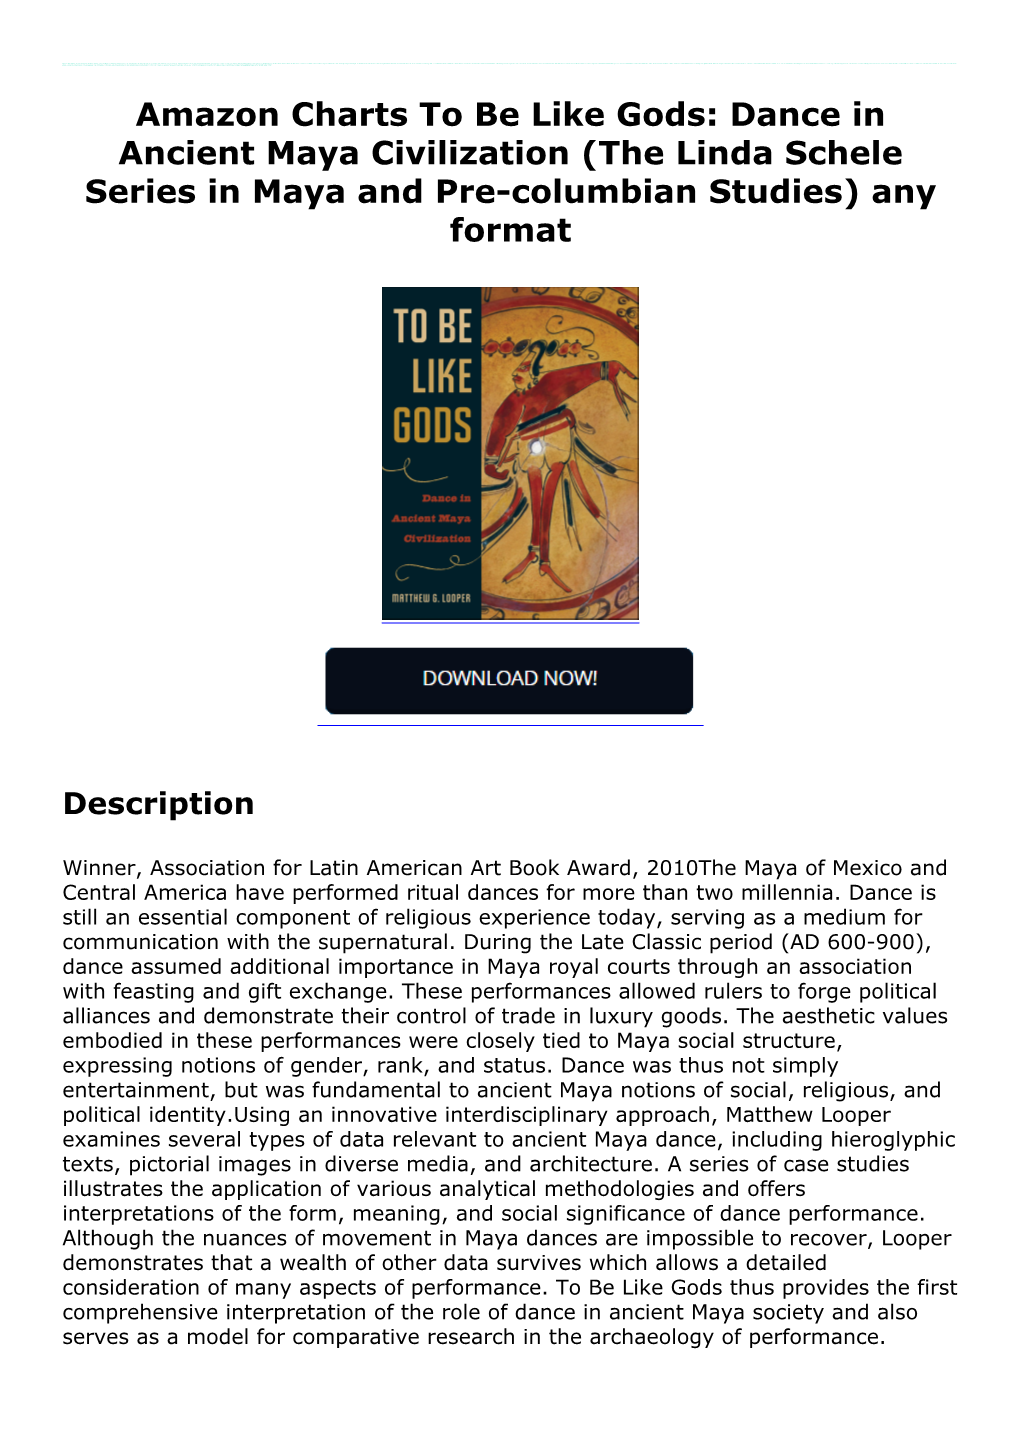 Dance in Ancient Maya Civilization (The Linda Schele Series in Maya and Pre-Columbian Studies) Any Format